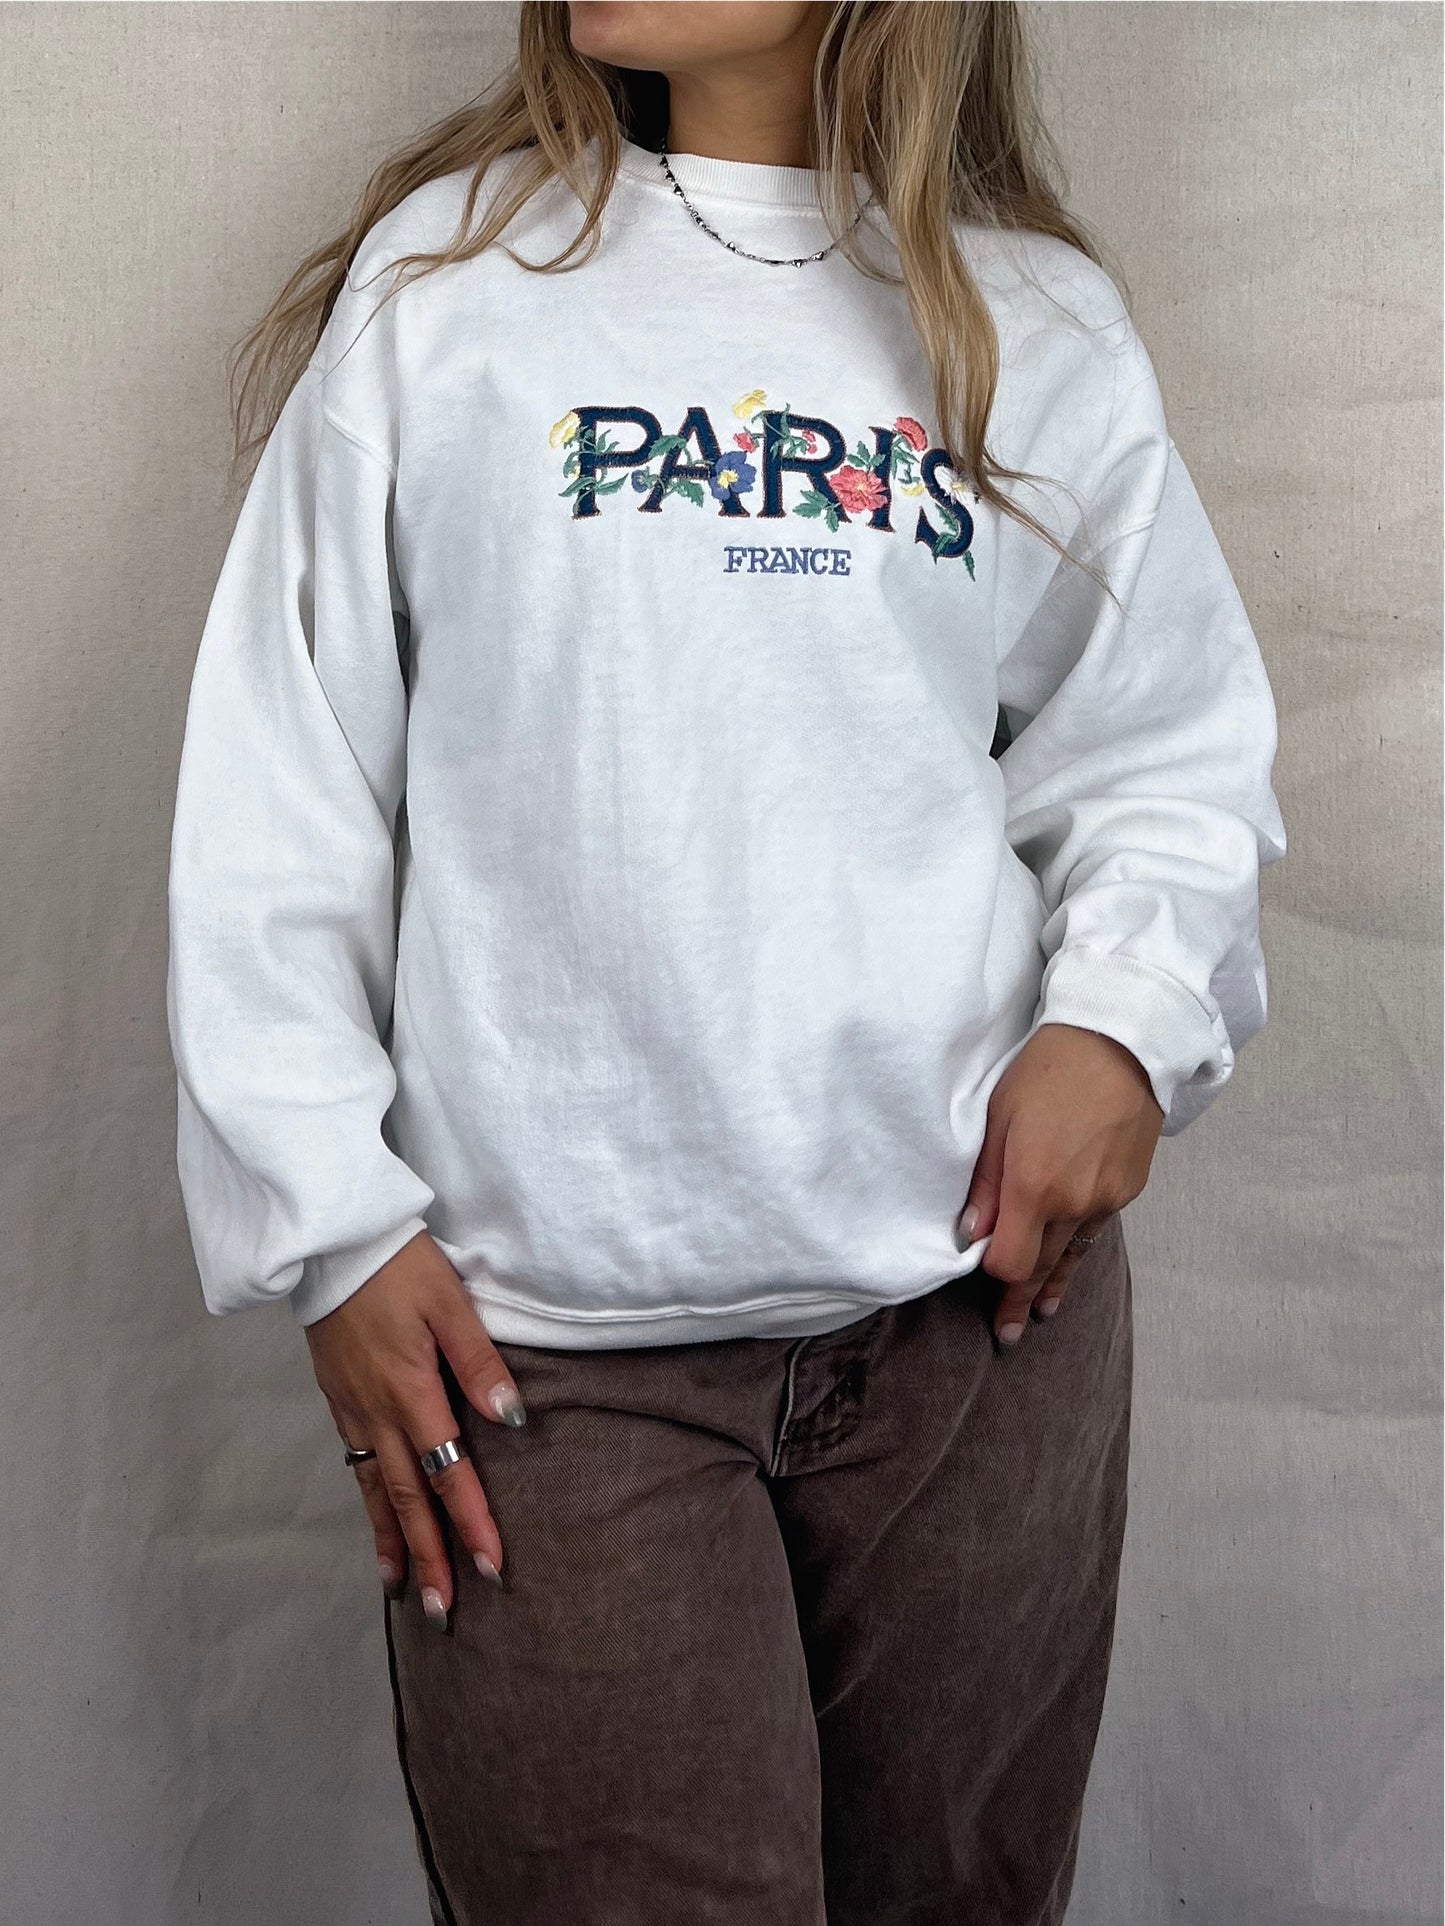 90's Paris France Embroidered Vintage Sweatshirt Size 10